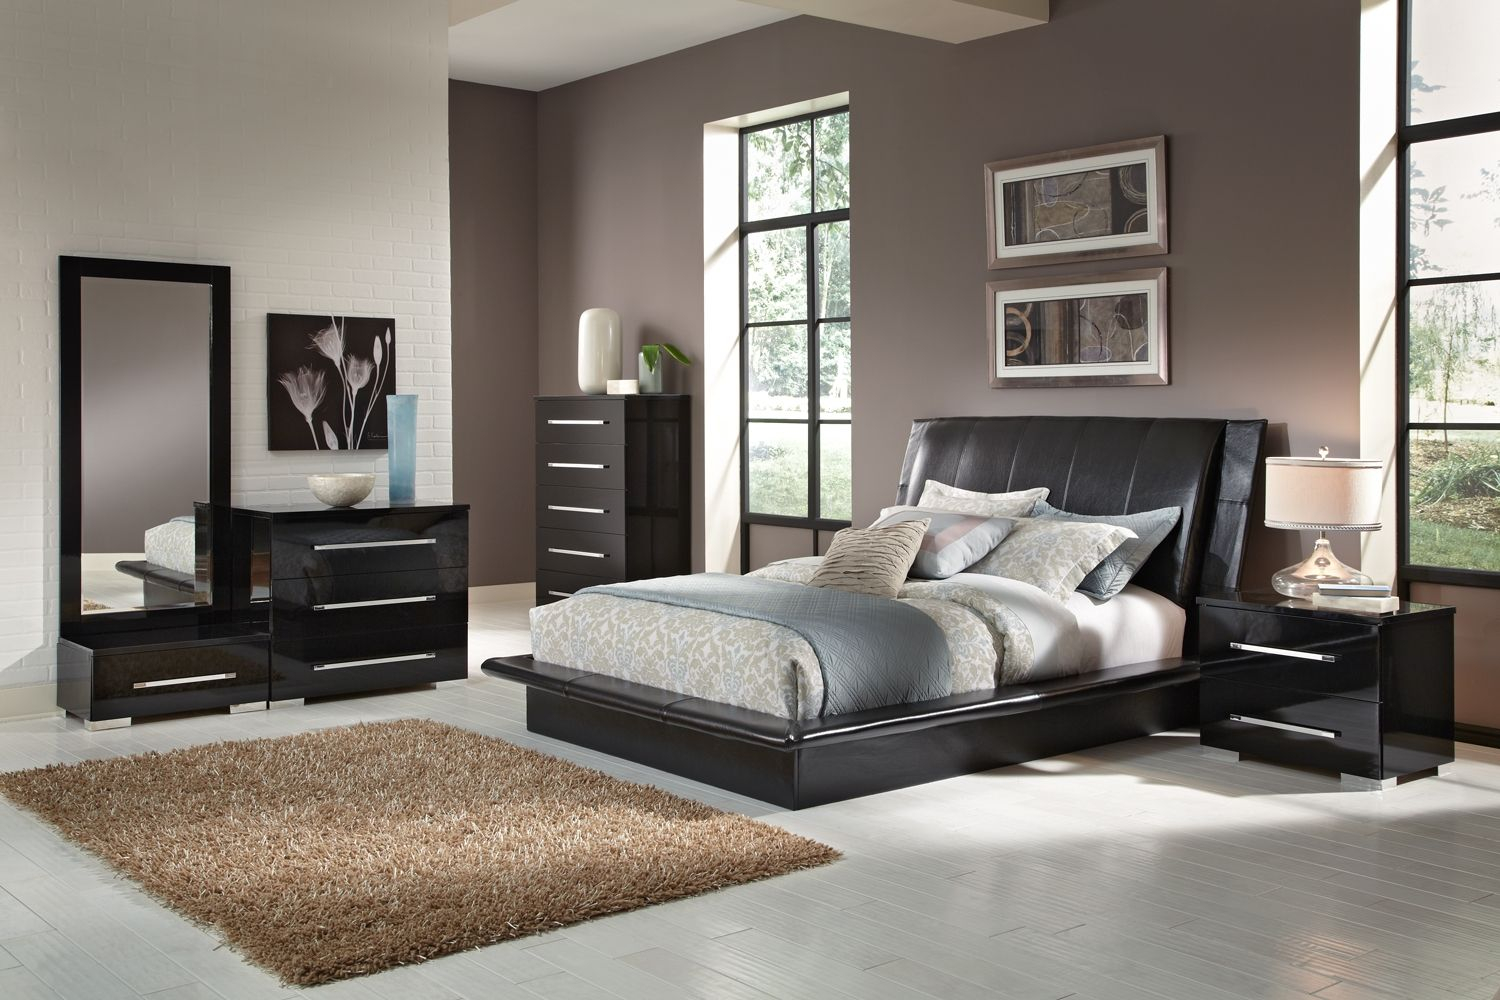 Dimora Black 7 Pc King Bedroom Alternate Value City Furniture within size 1500 X 1000